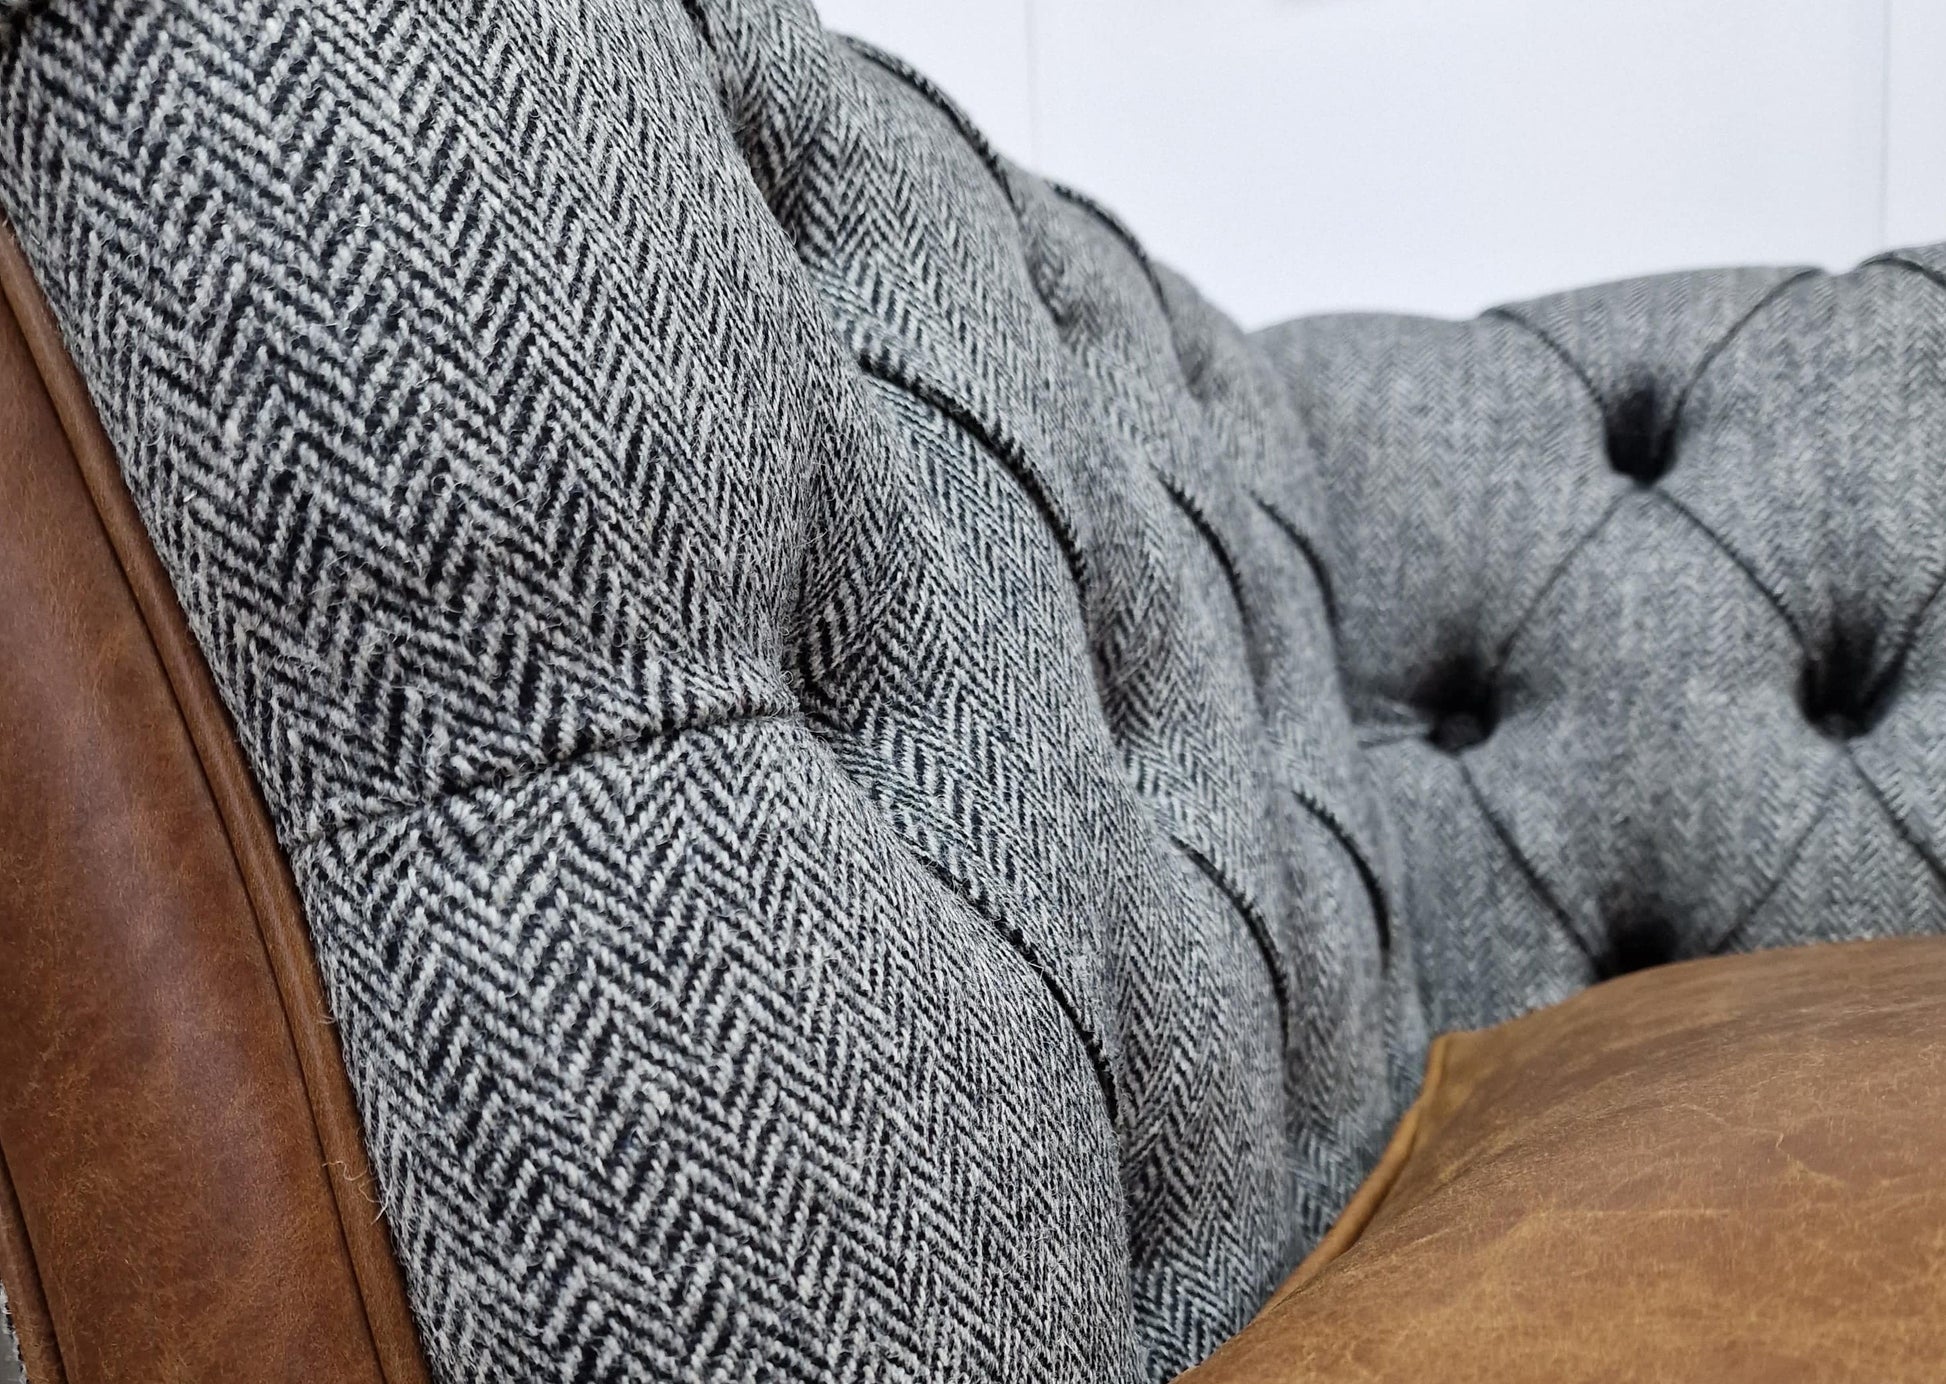 3 Seater - Harris Tweed and Leather Sofa - Grey Herringbone - Bernard - Rydan Interiors